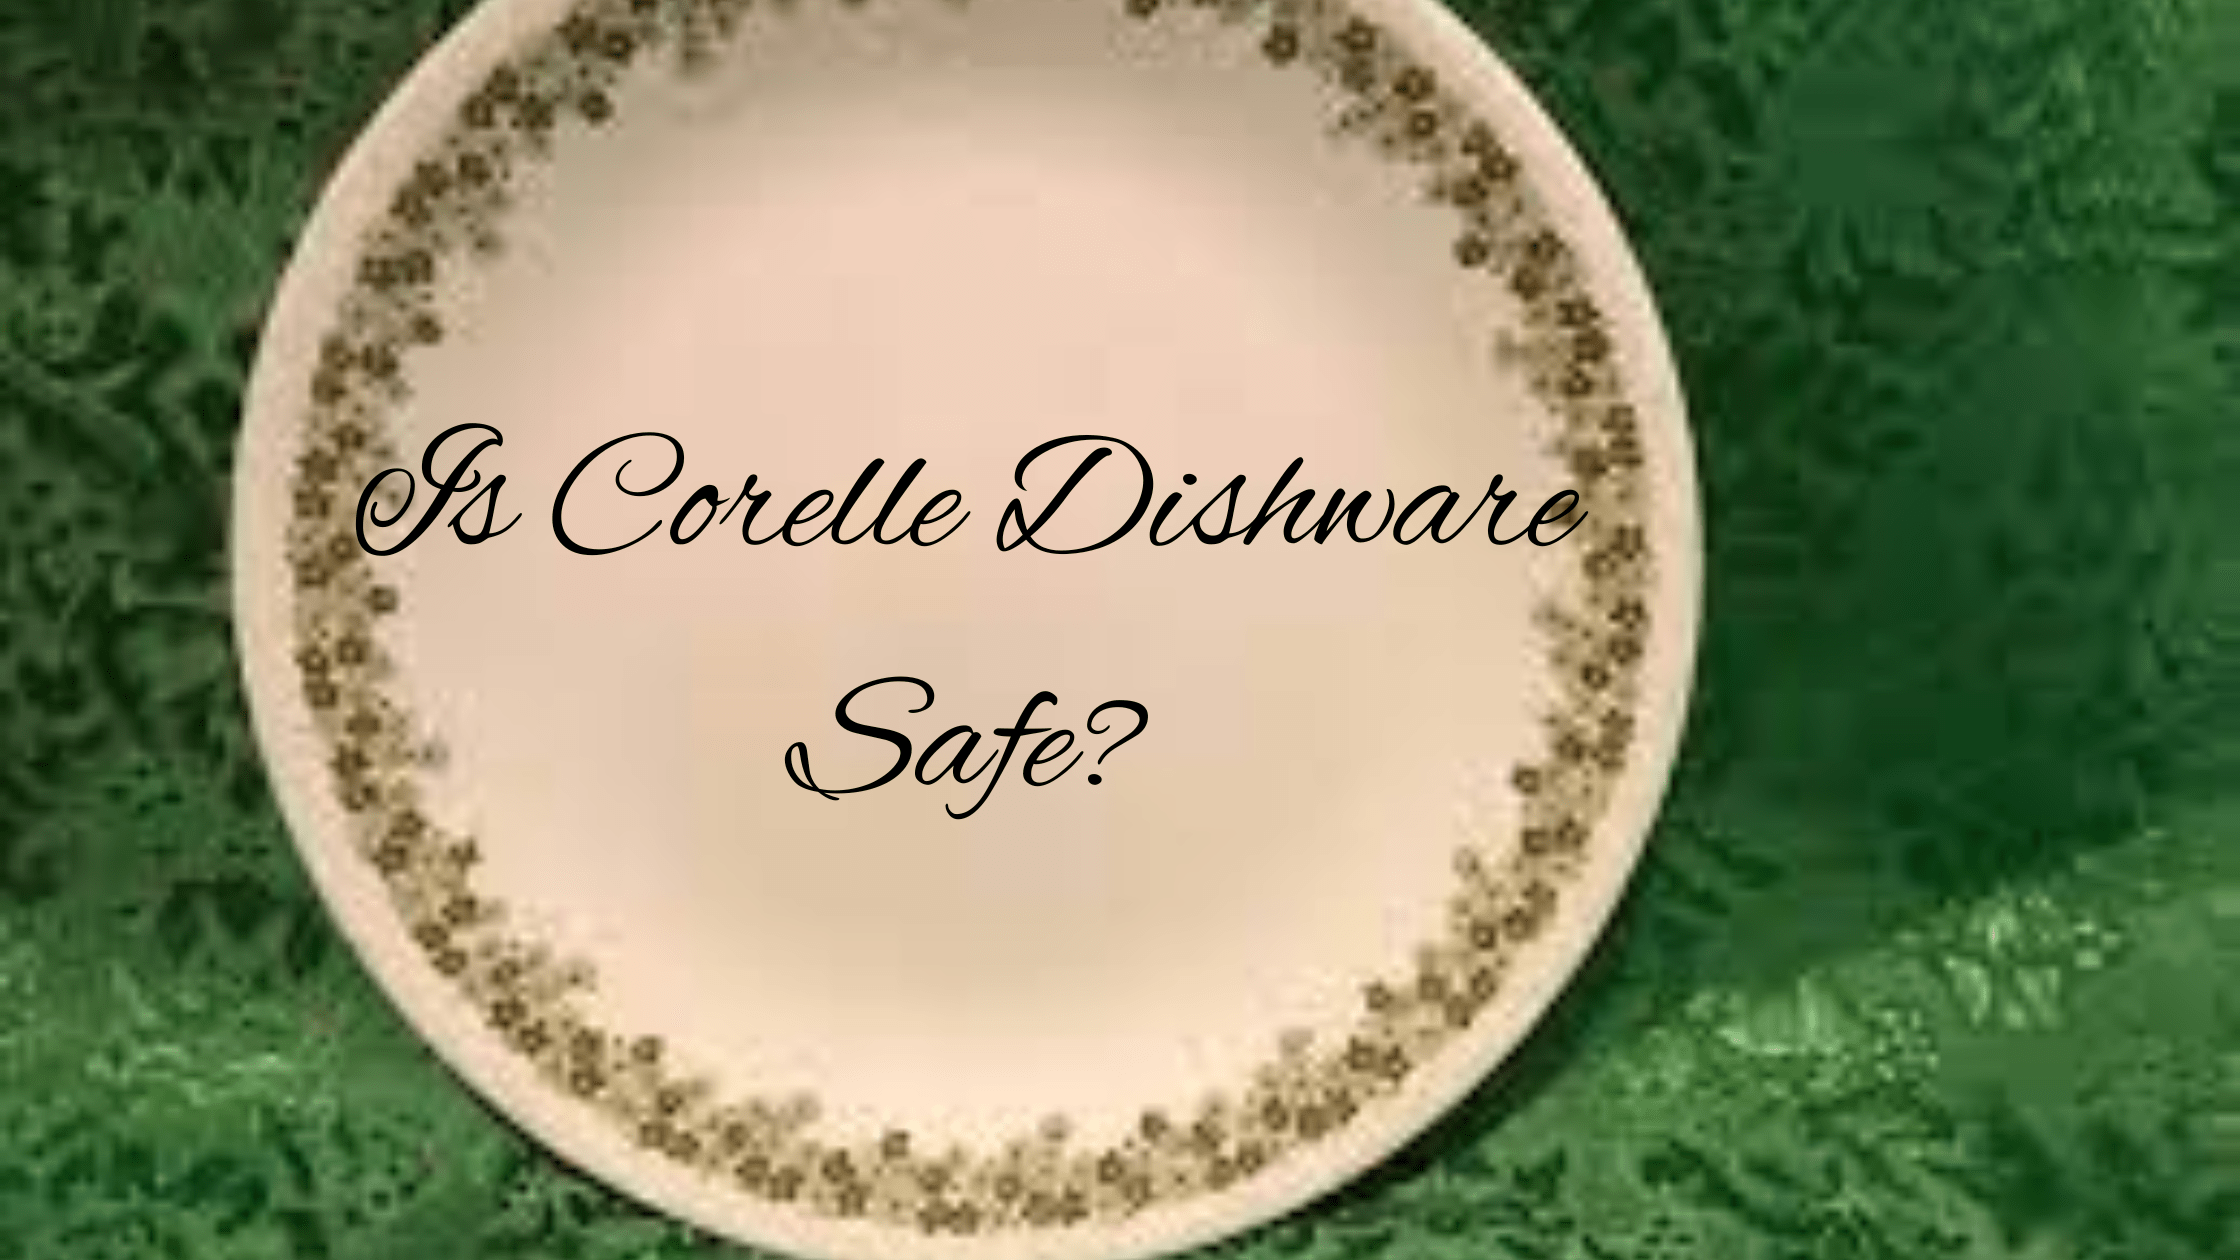 Is Corelle Dishware Safe?